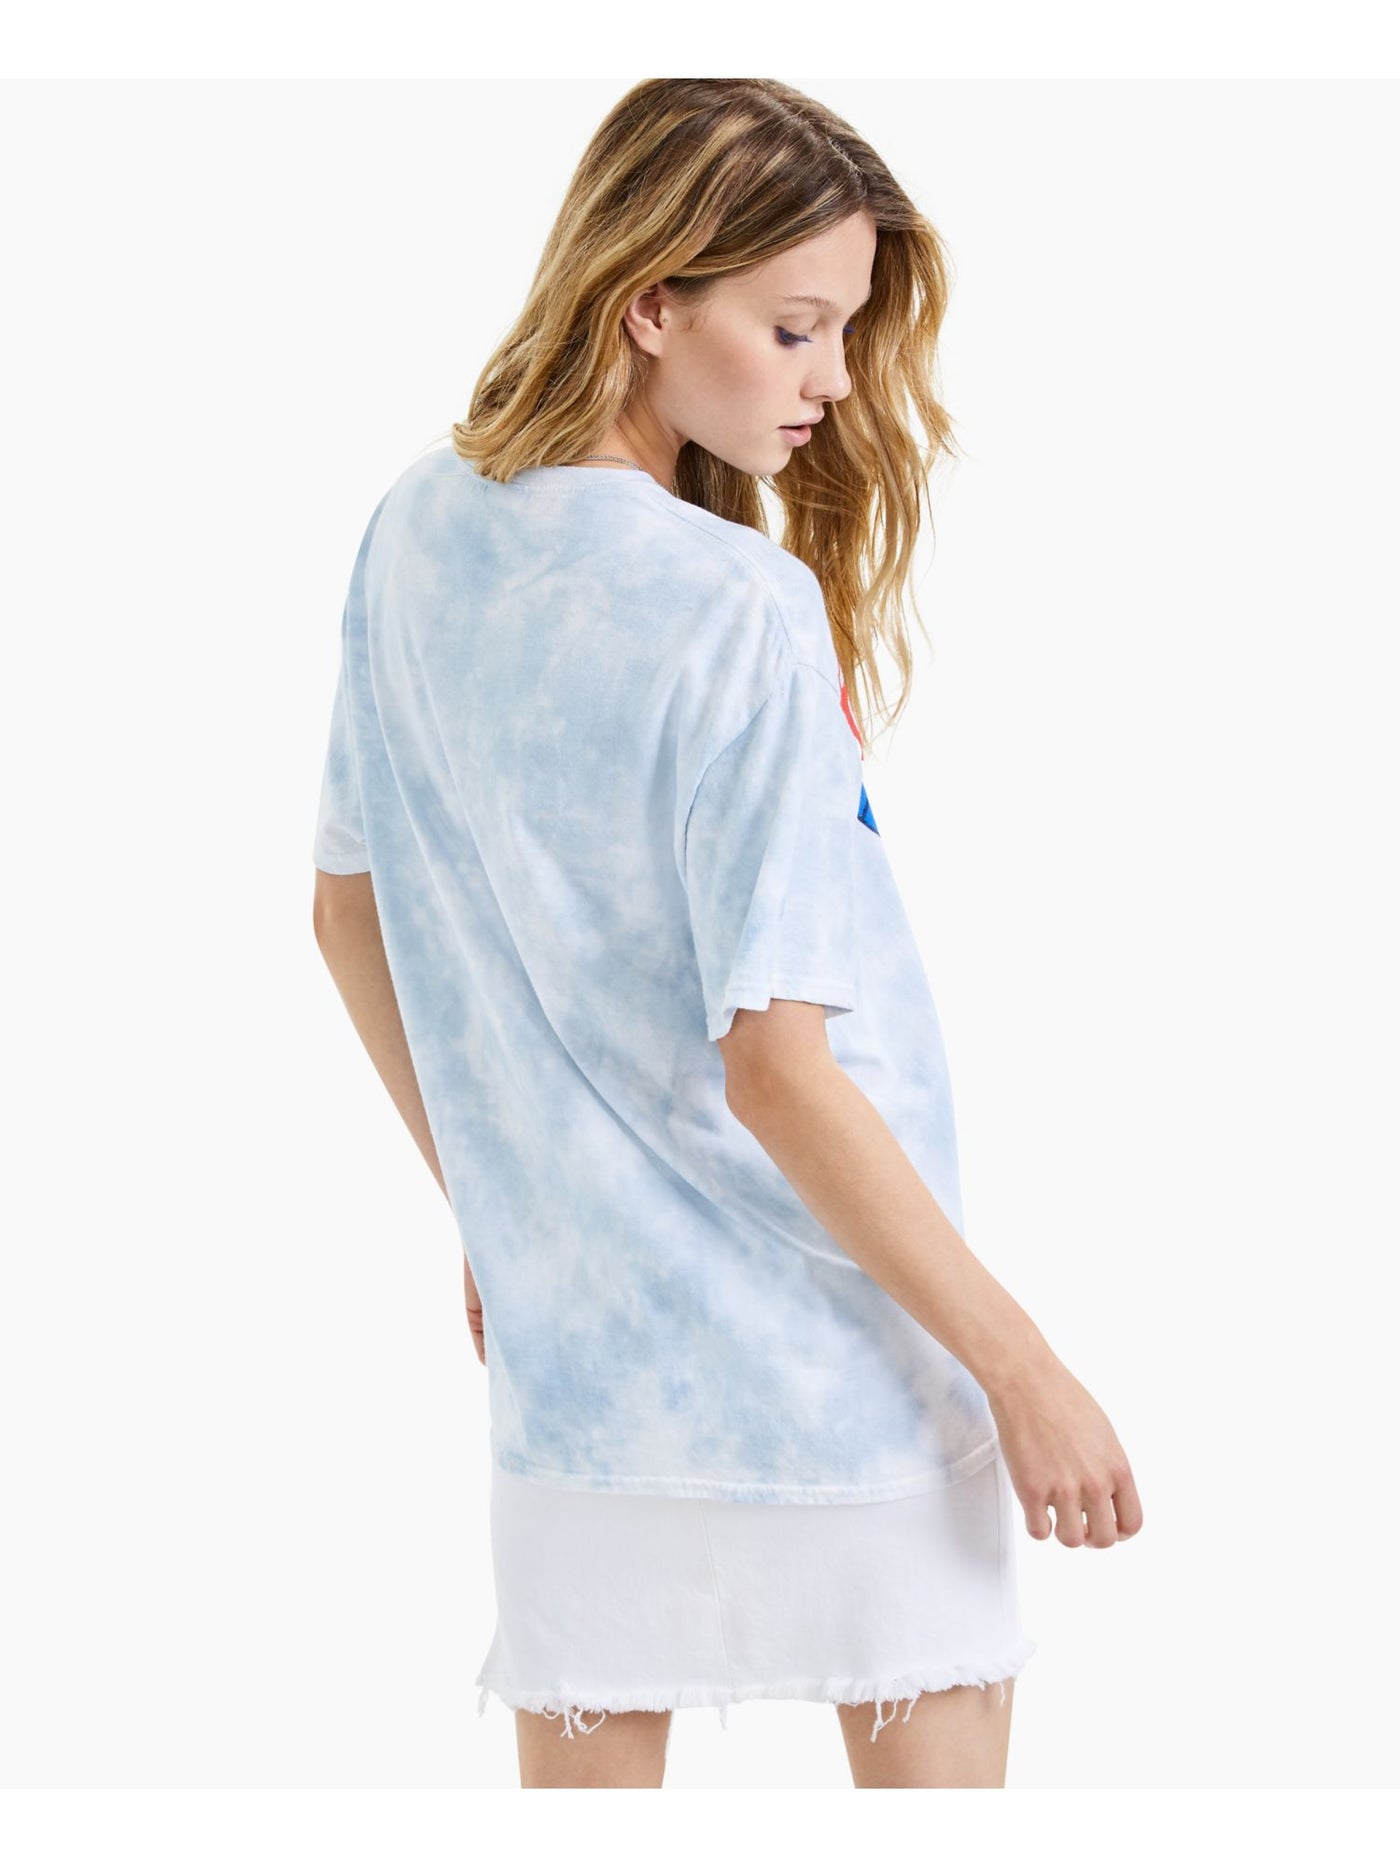 JUNK FOOD Womens Light Blue Stretch Acid Wash Short Sleeve Crew Neck T-Shirt S